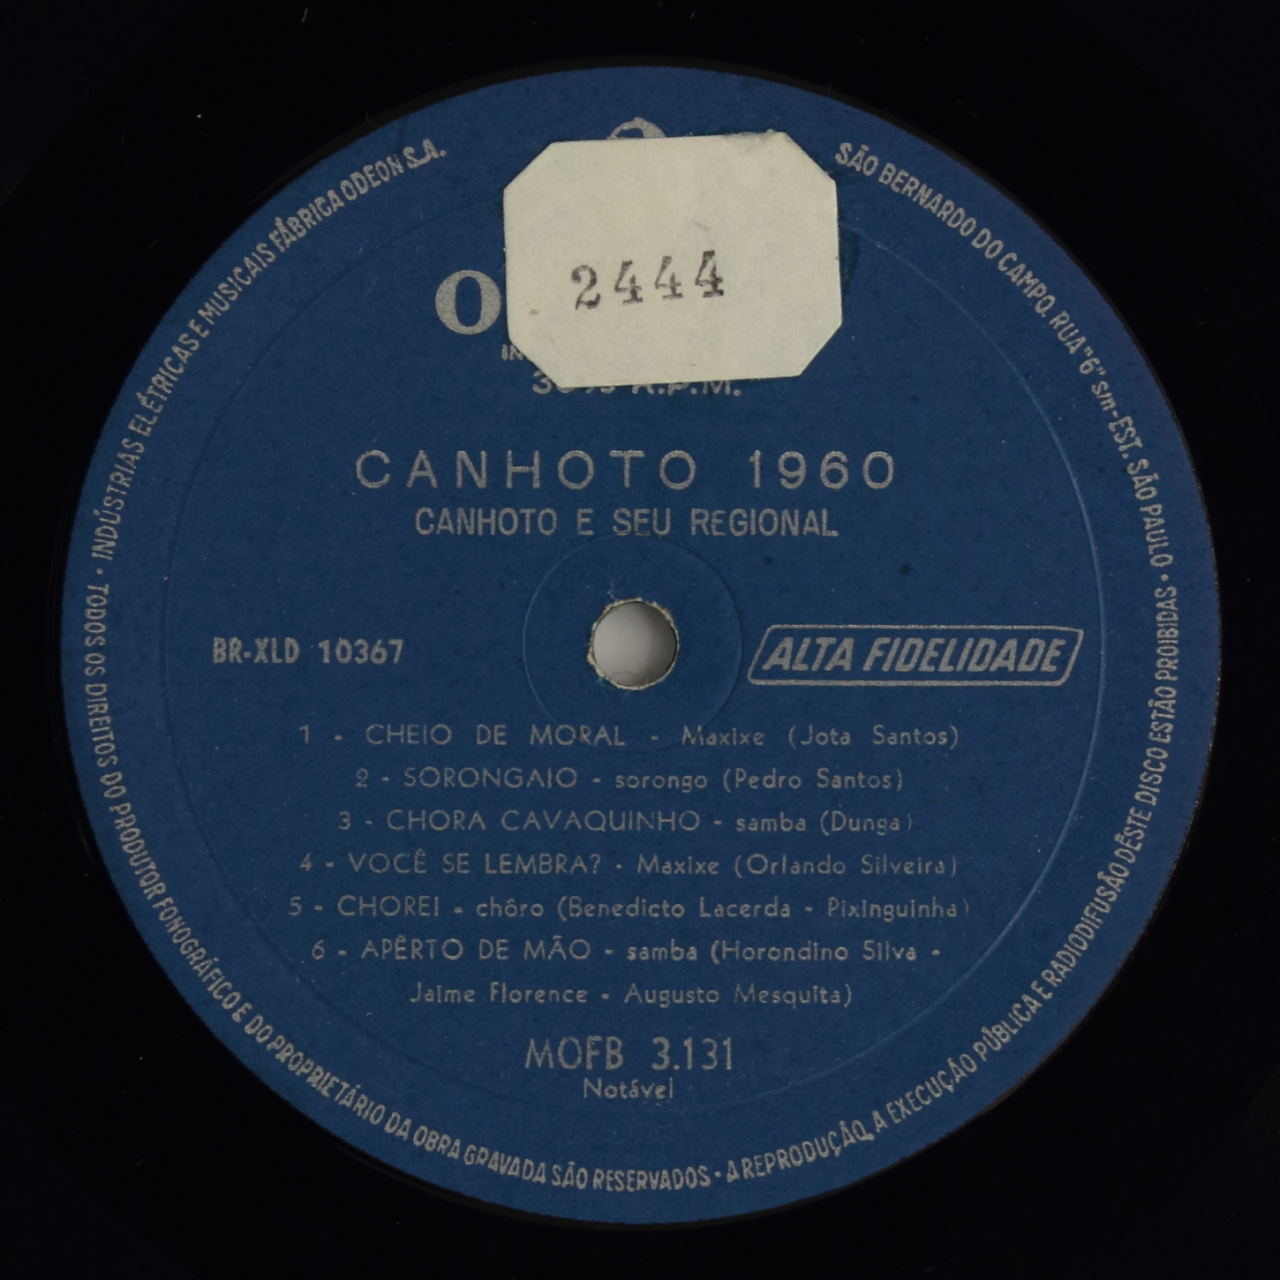 Canhoto 1960